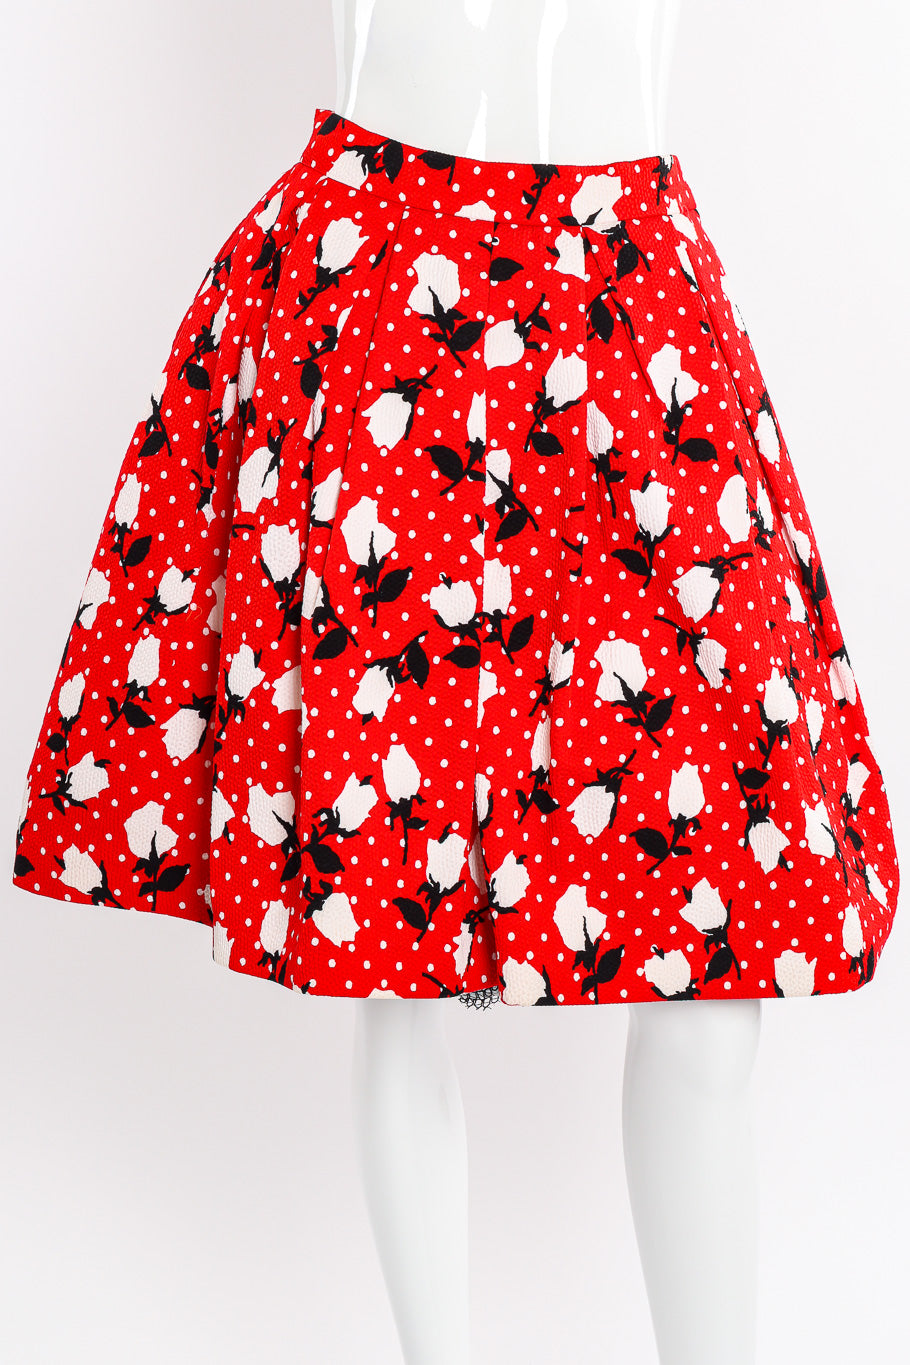 Floral dot full skirt by Christian La Croix on mannequin front @recessla